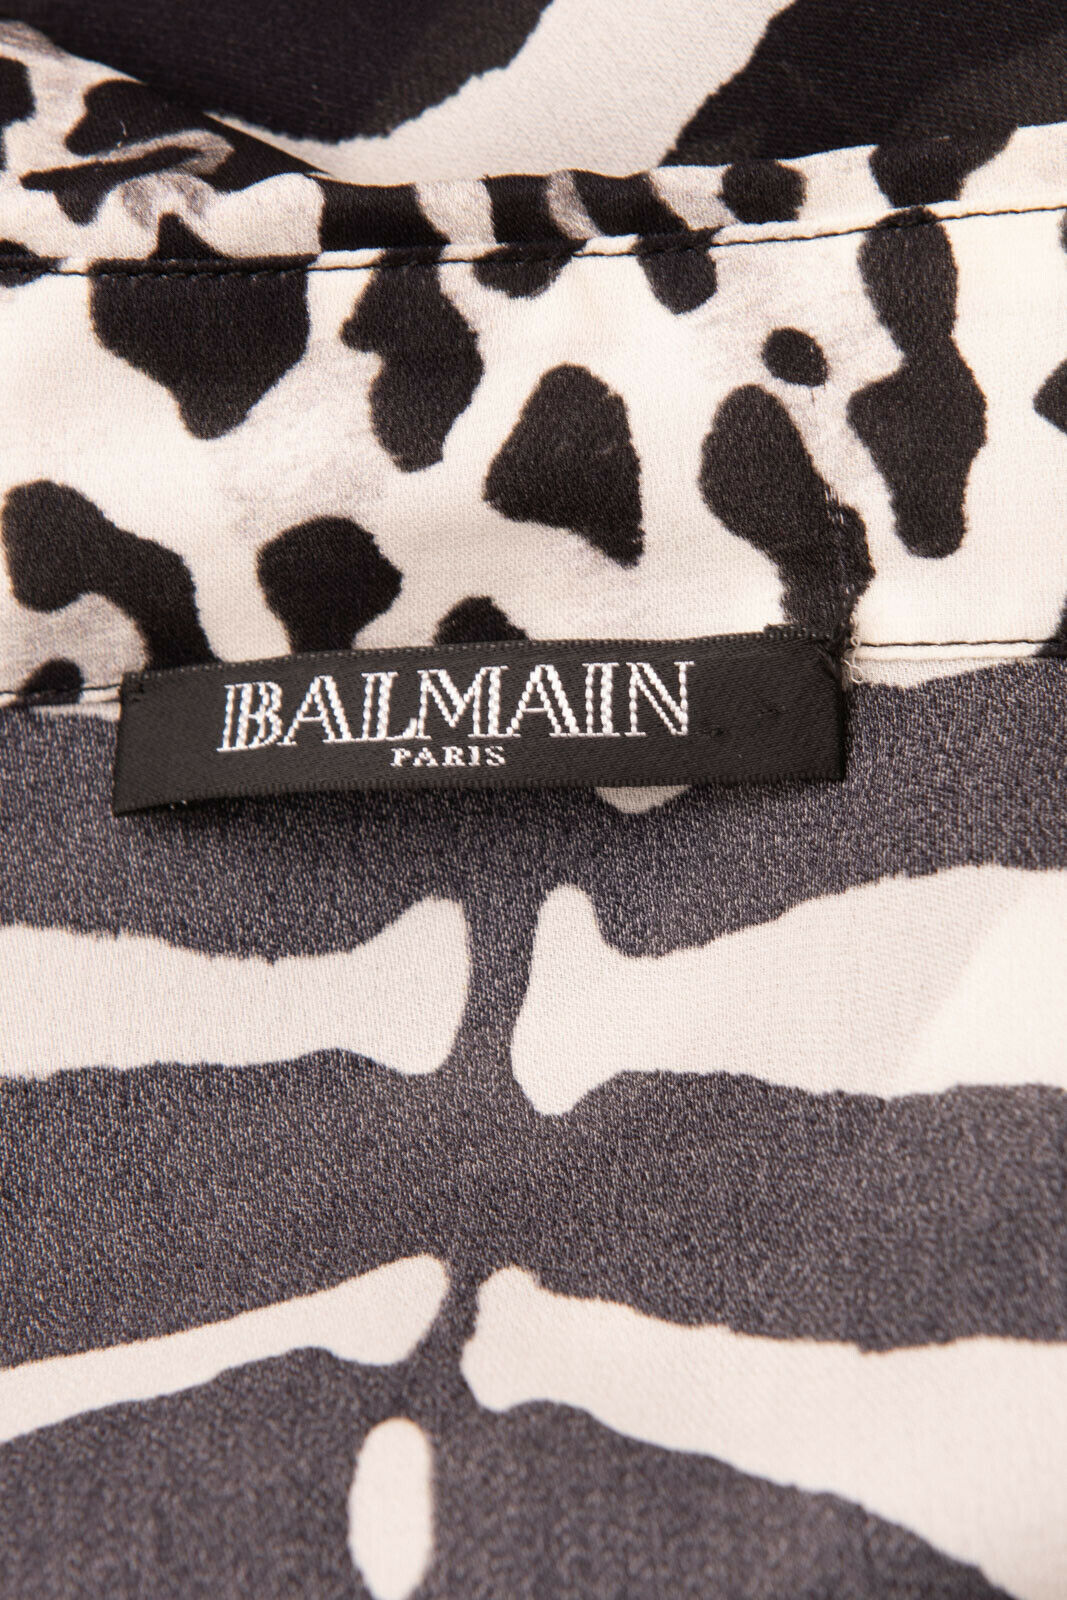 BALMAIN Silk Blouse Patterned Lion Head Size 36